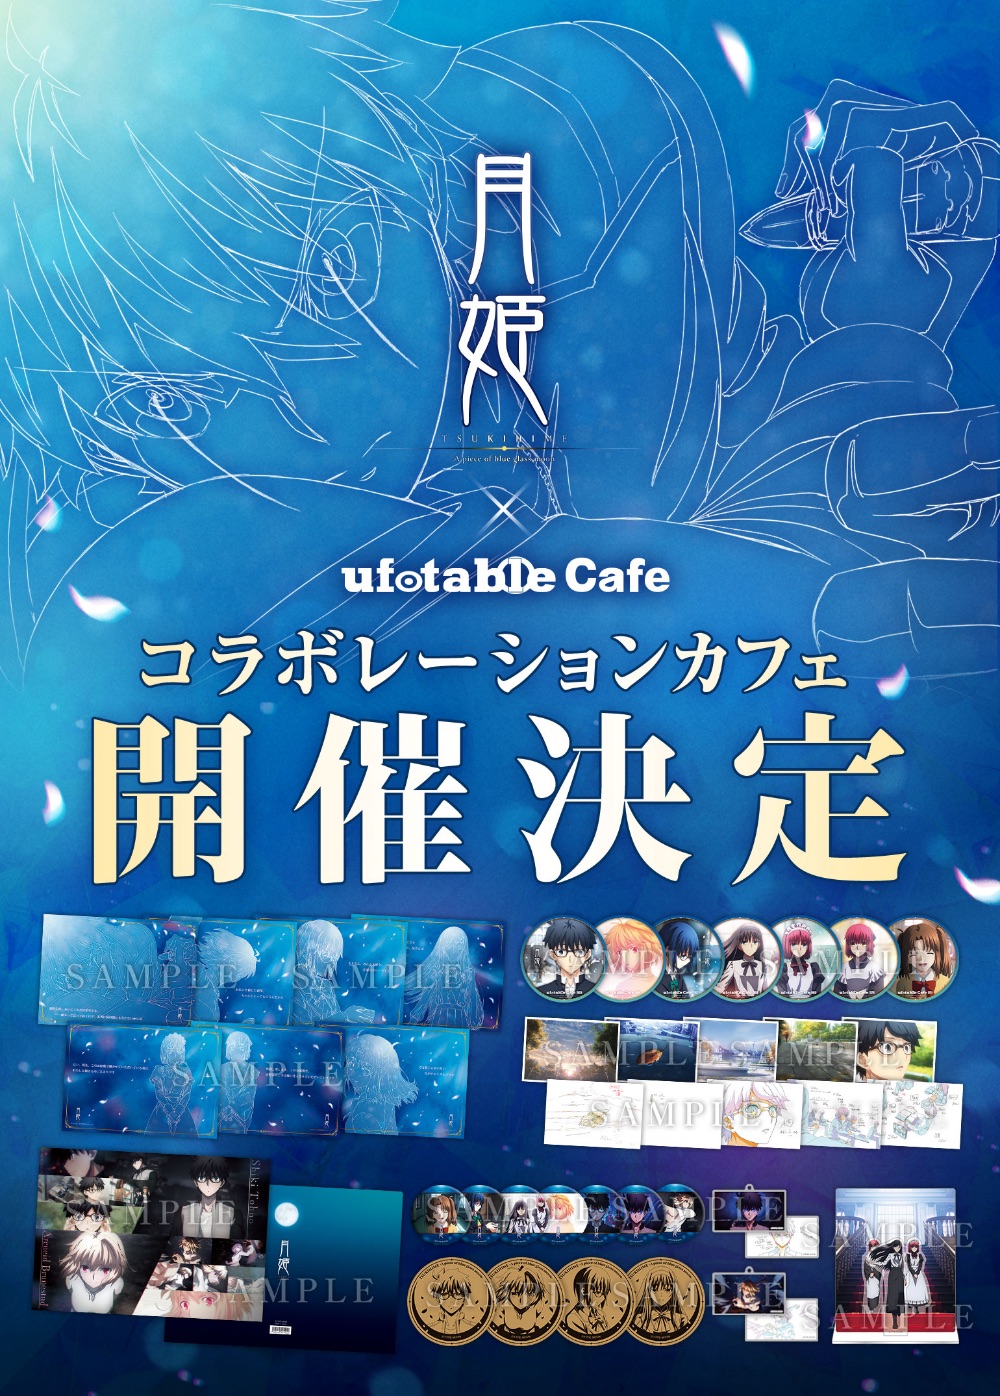 【ufotable Cafe東京】「月姫 -A piece of blue glass moon-」コラボレーションカフェ